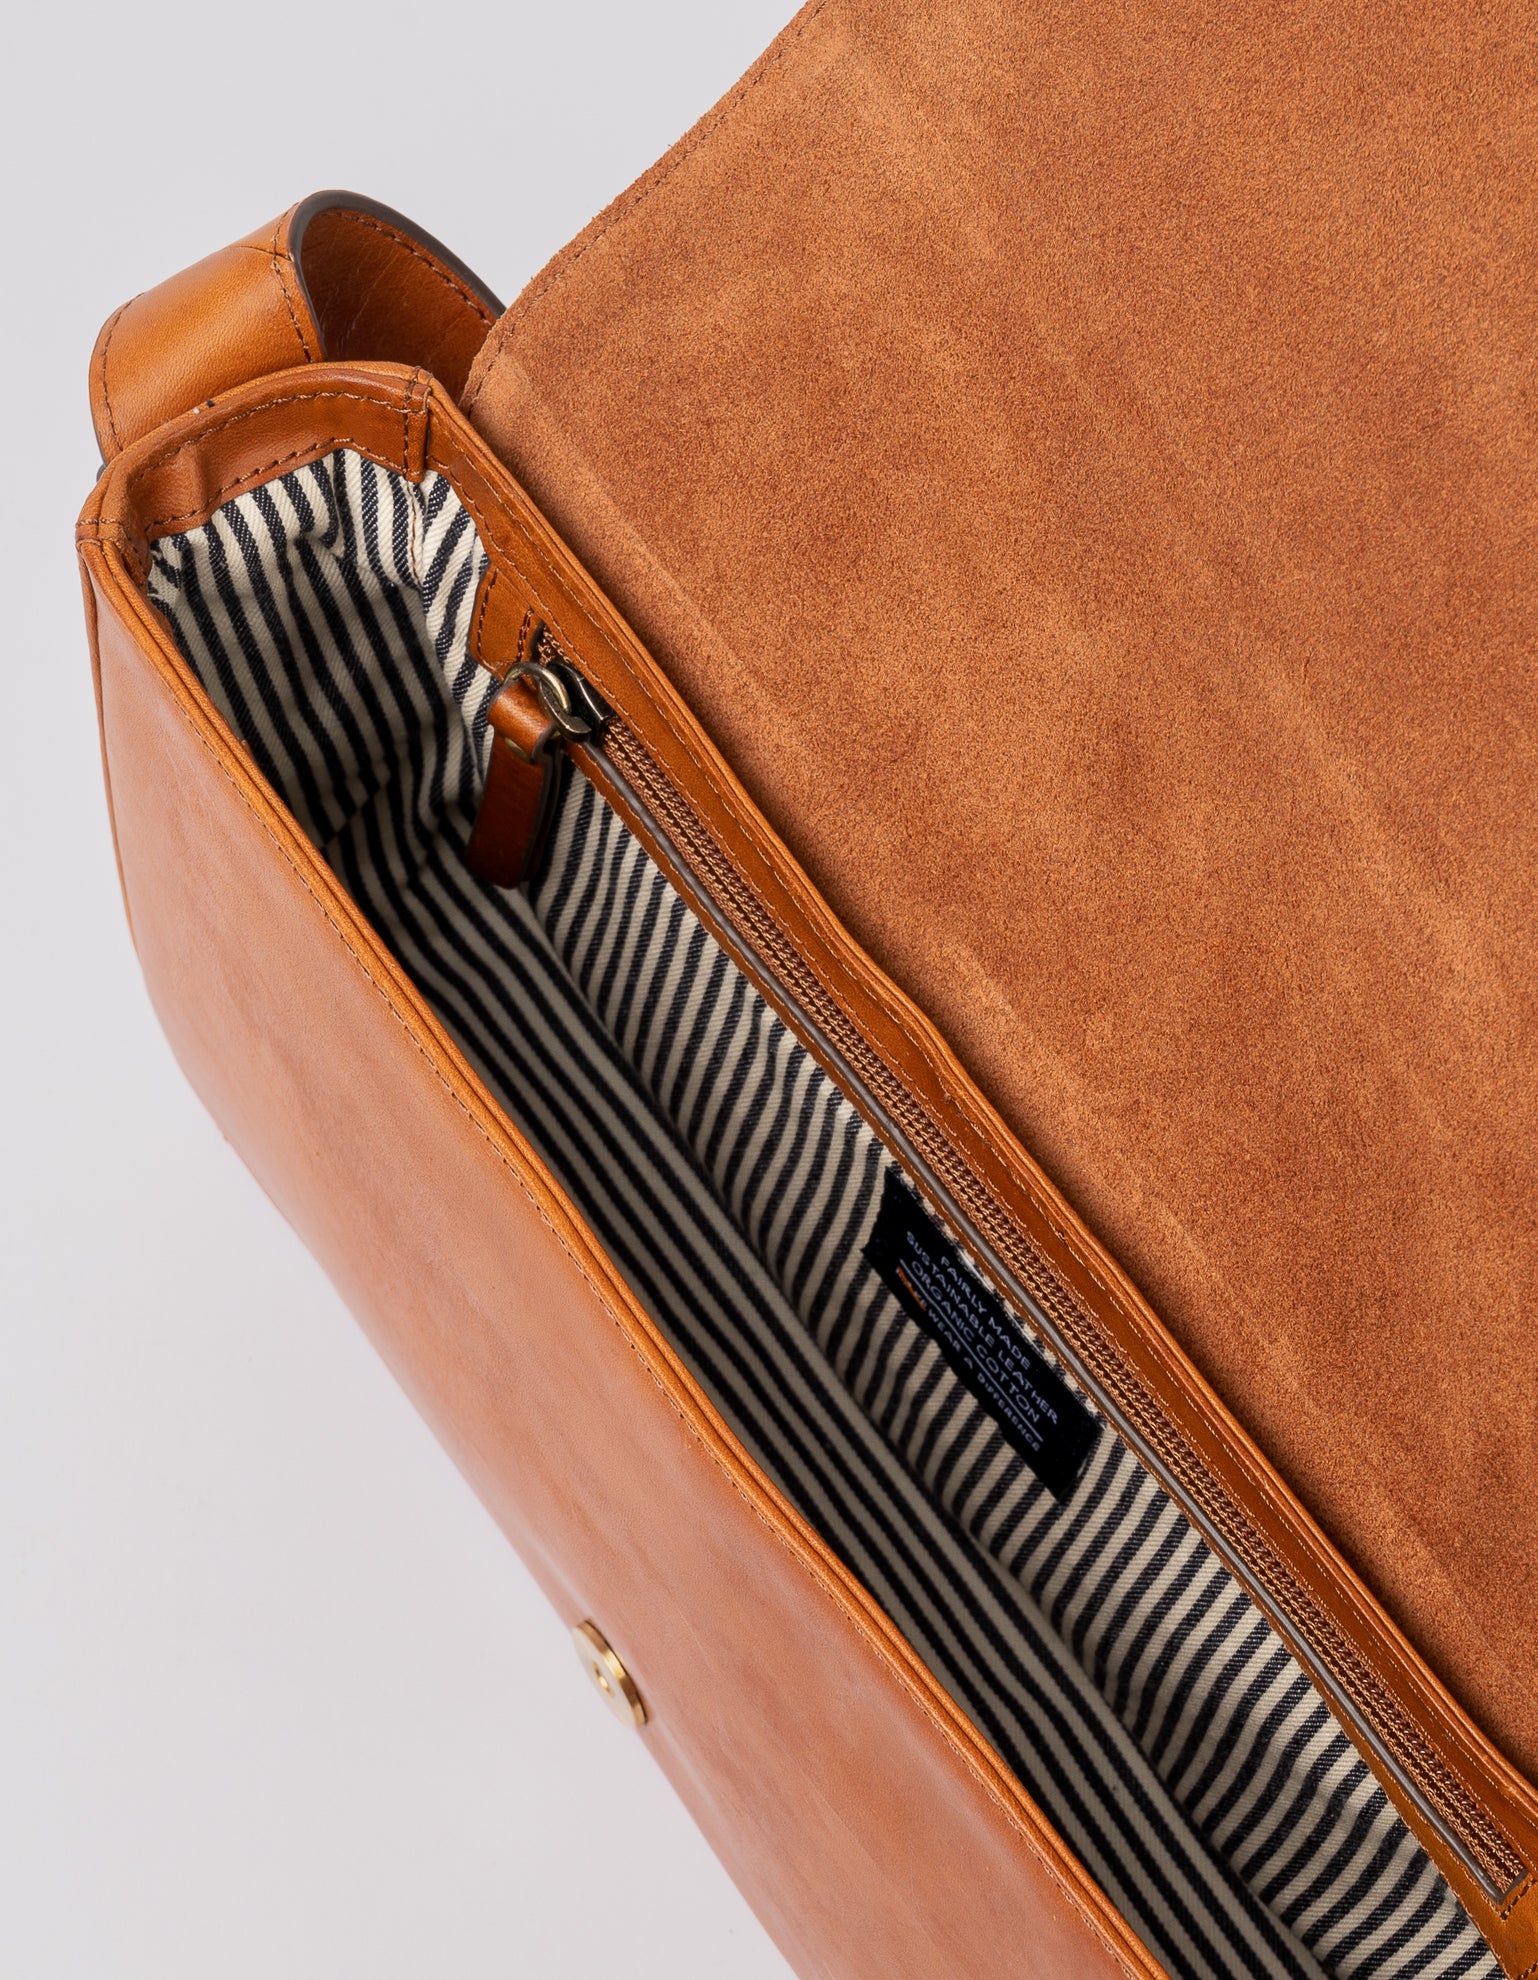 Cognac Longuette Leather womens handbag. Square shape with an adjustable strap. Inside product image.